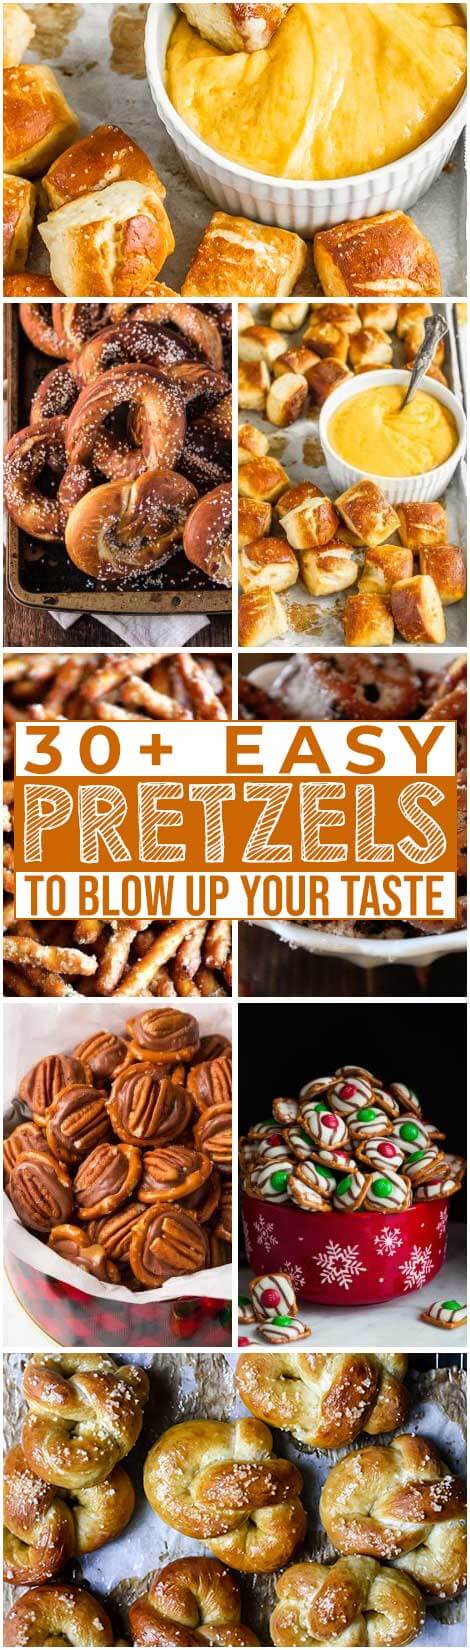 30 Pretzels To Blow Up Your Taste